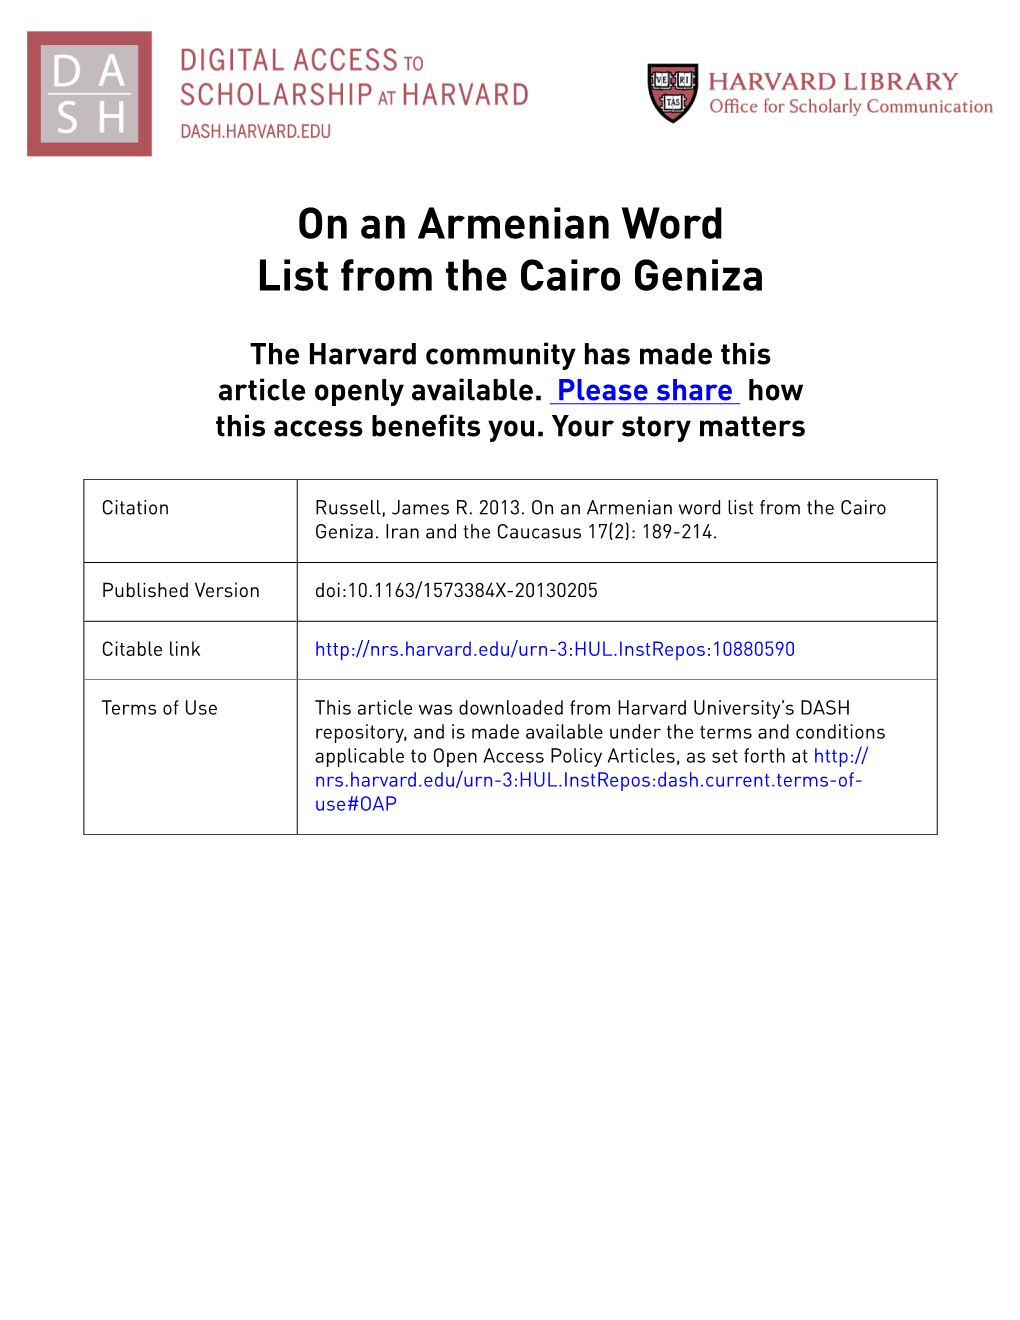 On an Armenian Word List from the Cairo Geniza